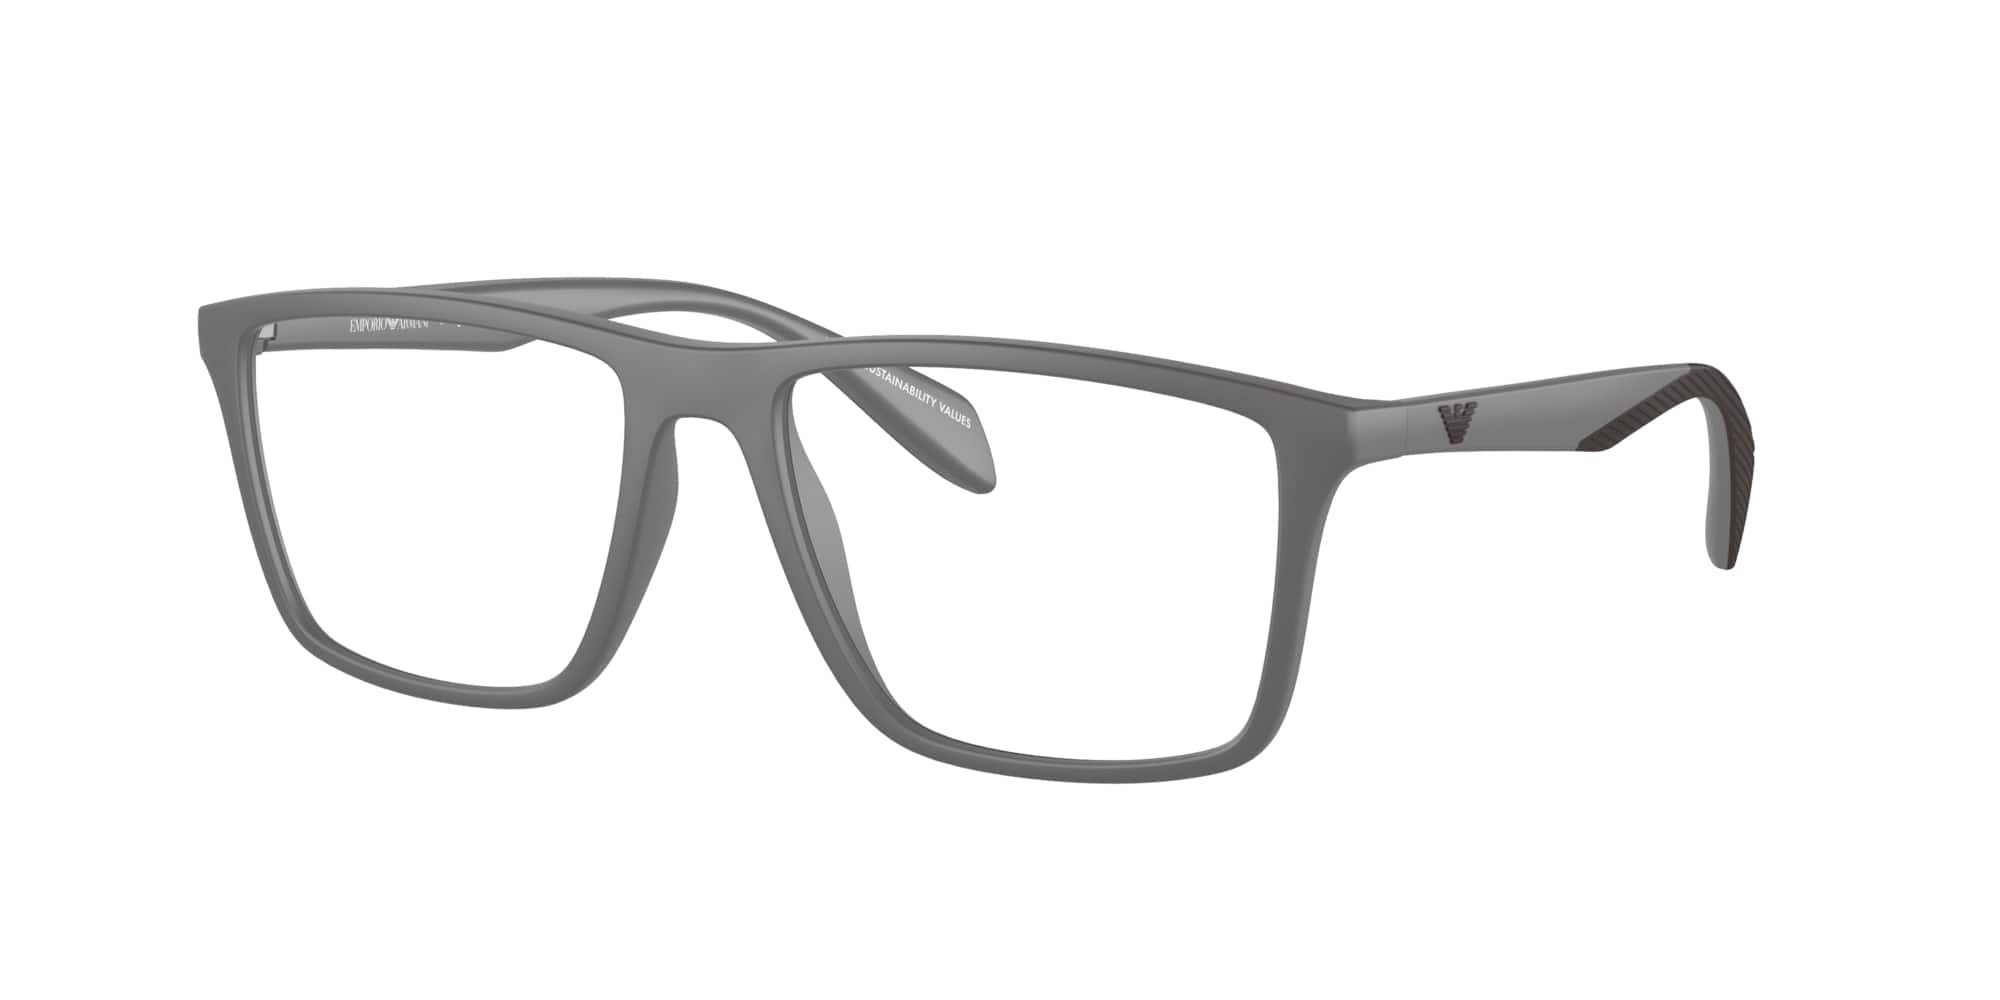 Emporio Armani Brille für Herren grau matt EA3230 5126 53